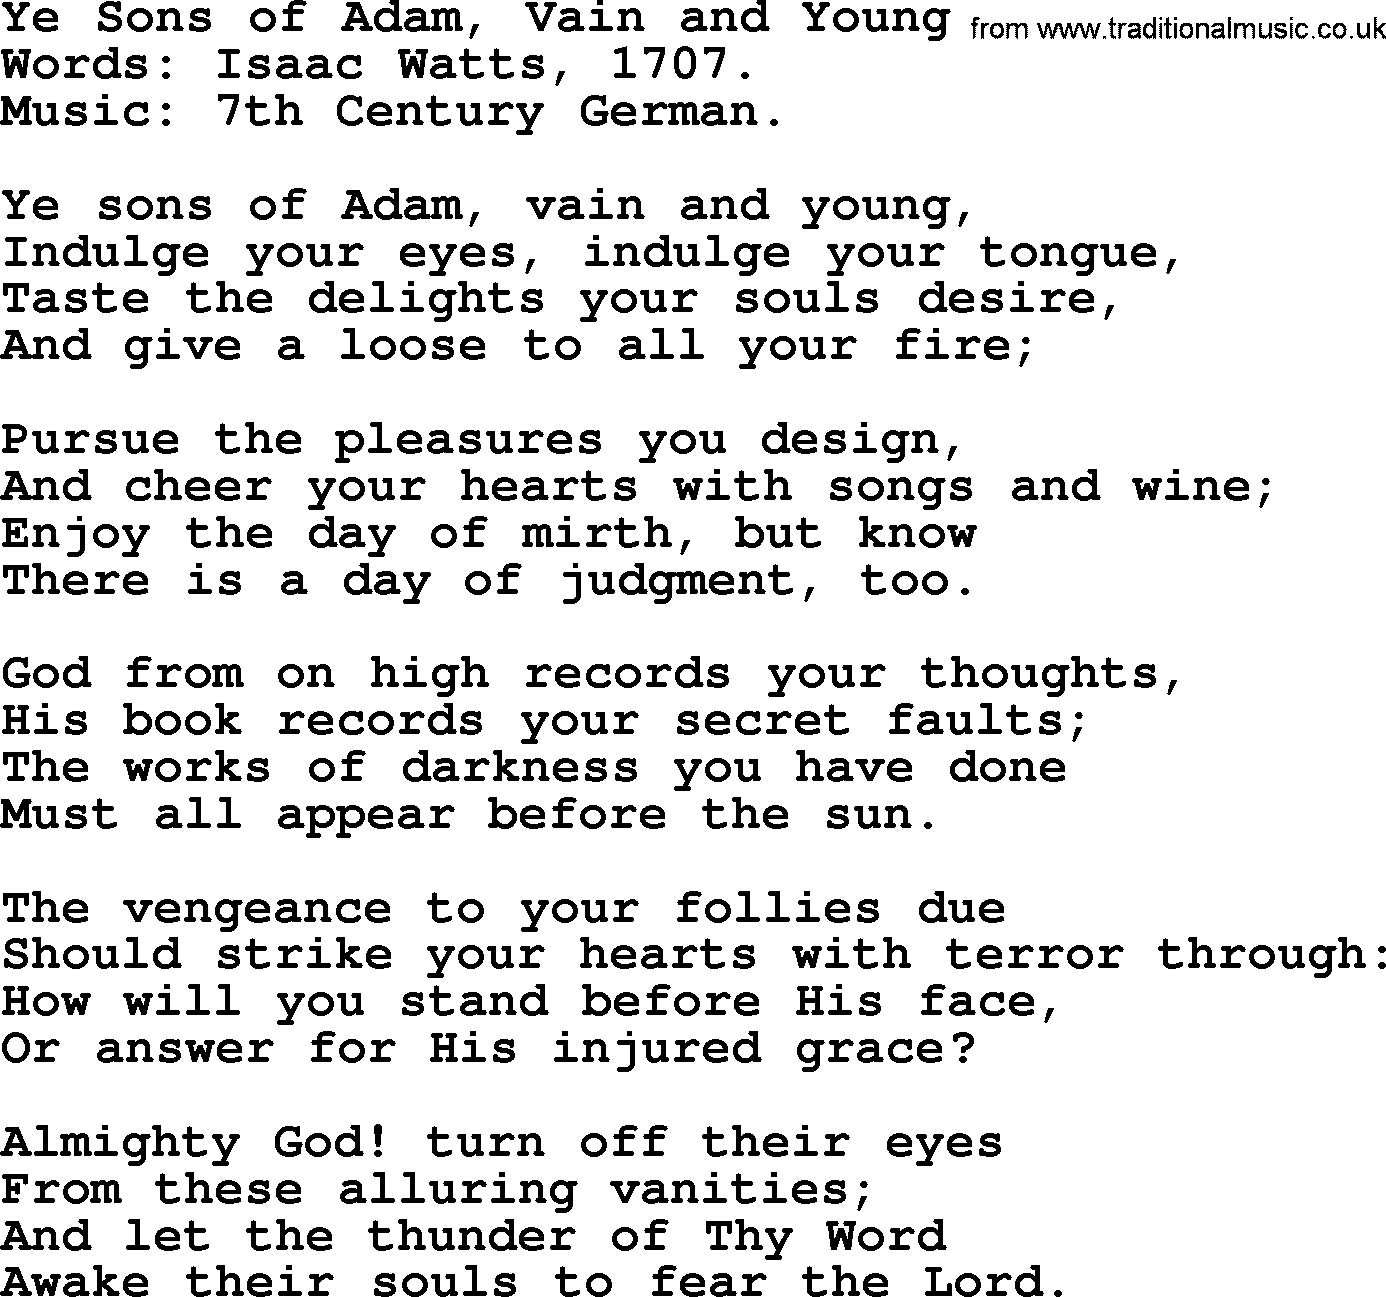 Isaac Watts Christian hymn: Ye Sons of Adam, Vain and Young- lyricss